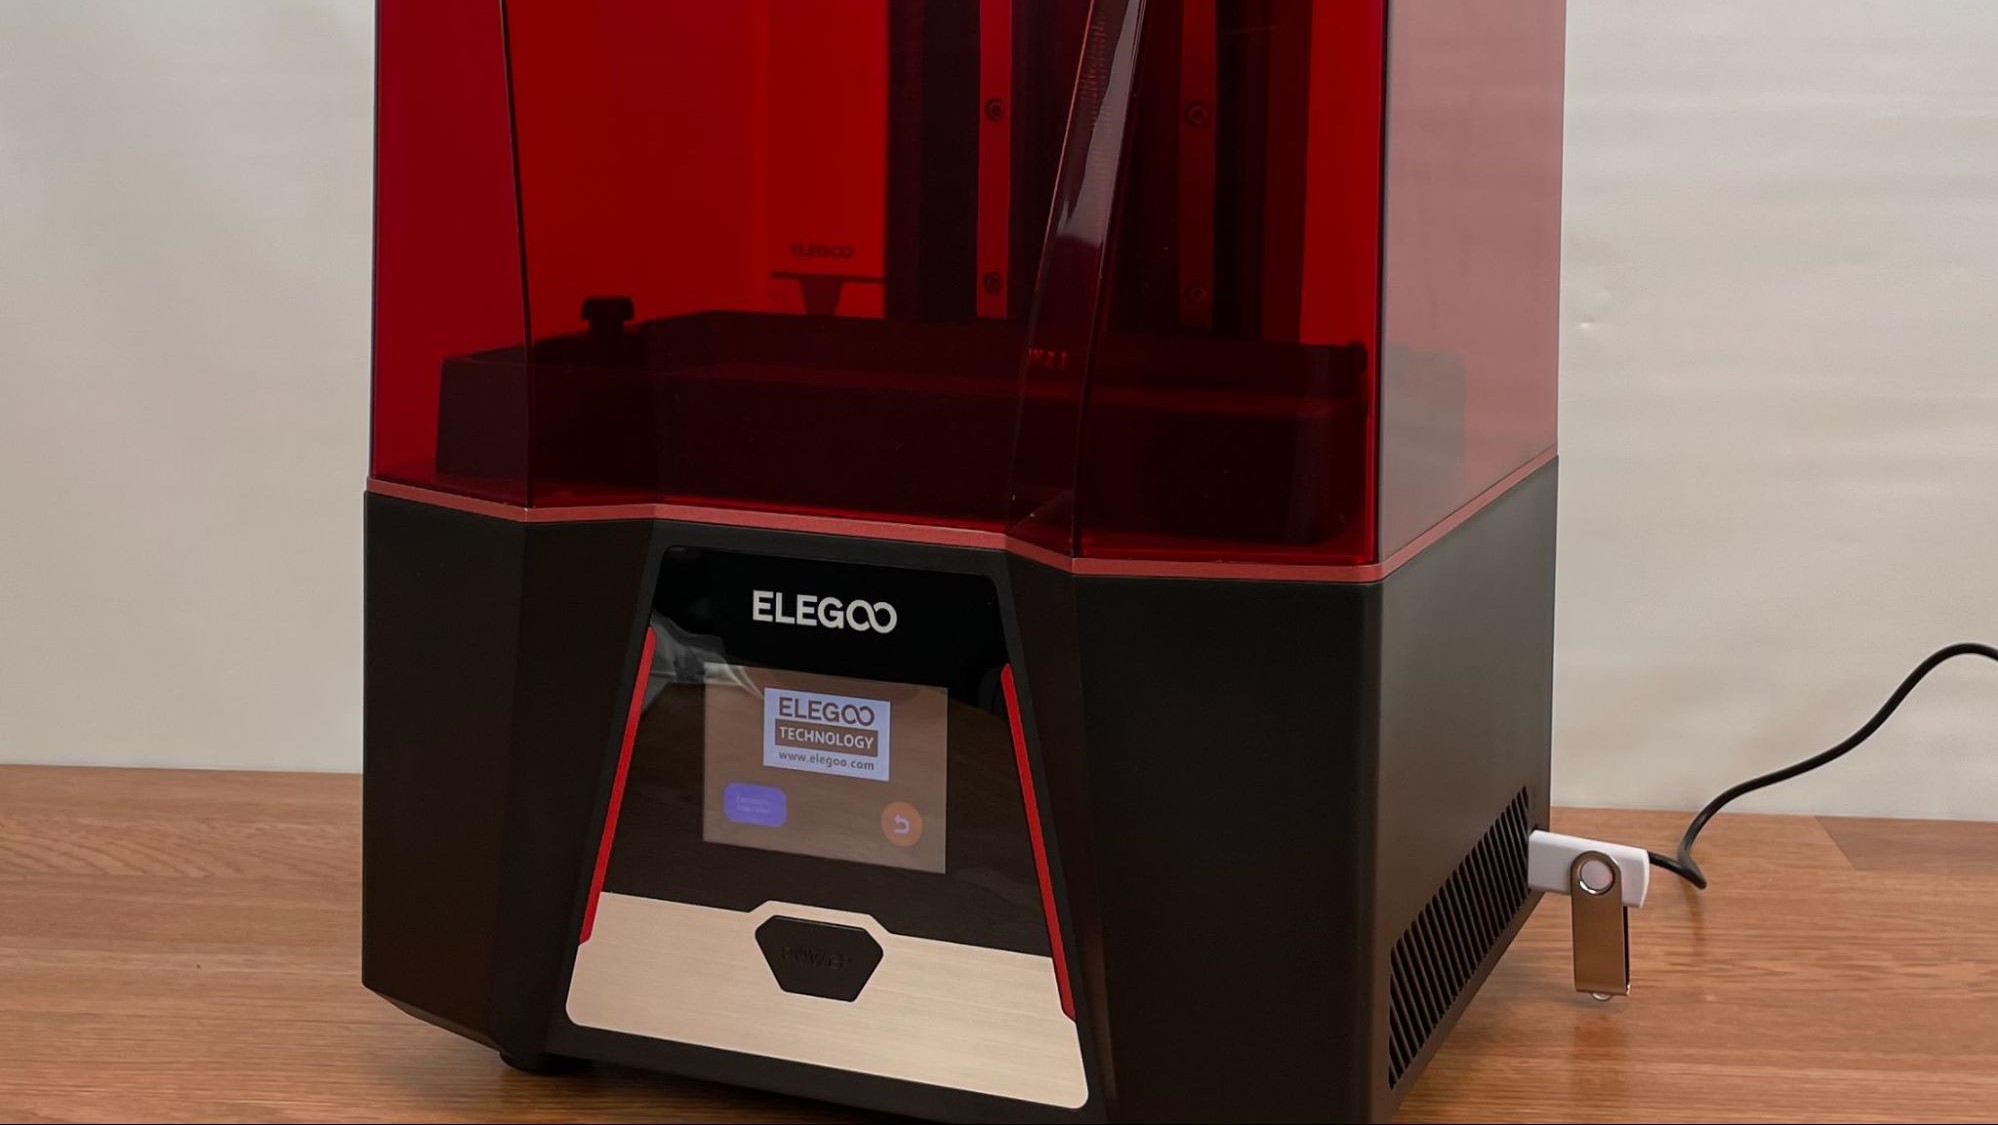 Elegoo Saturn 2: test of the 8k resin printer (preview) - 3D